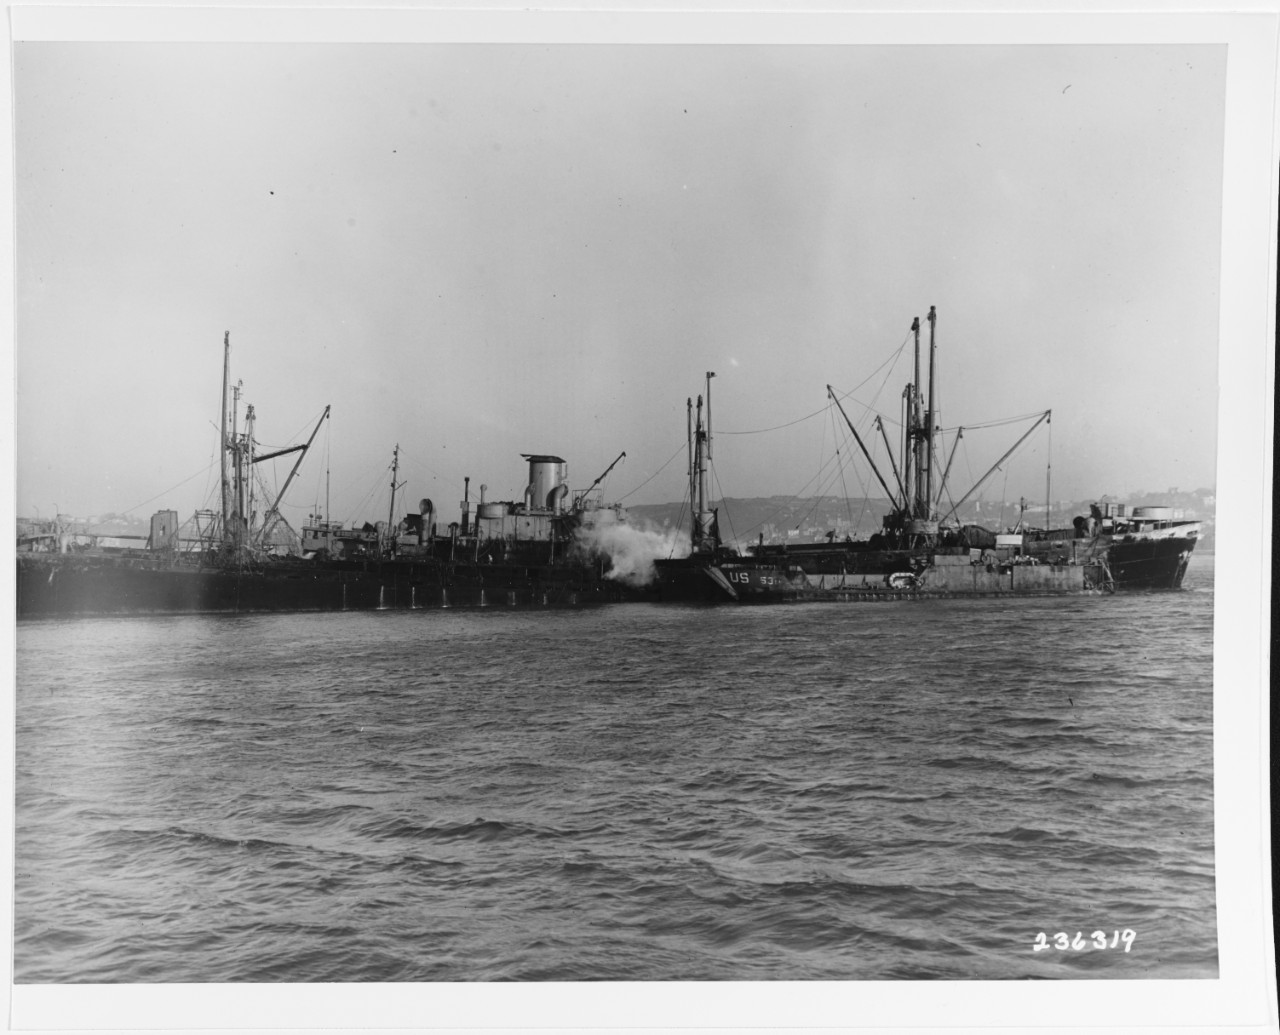 S.S. LEE S. OVERMAN ("Liberty" Ship) broken in half just forward of the bridge at Le Havre, France, December 24, 1944